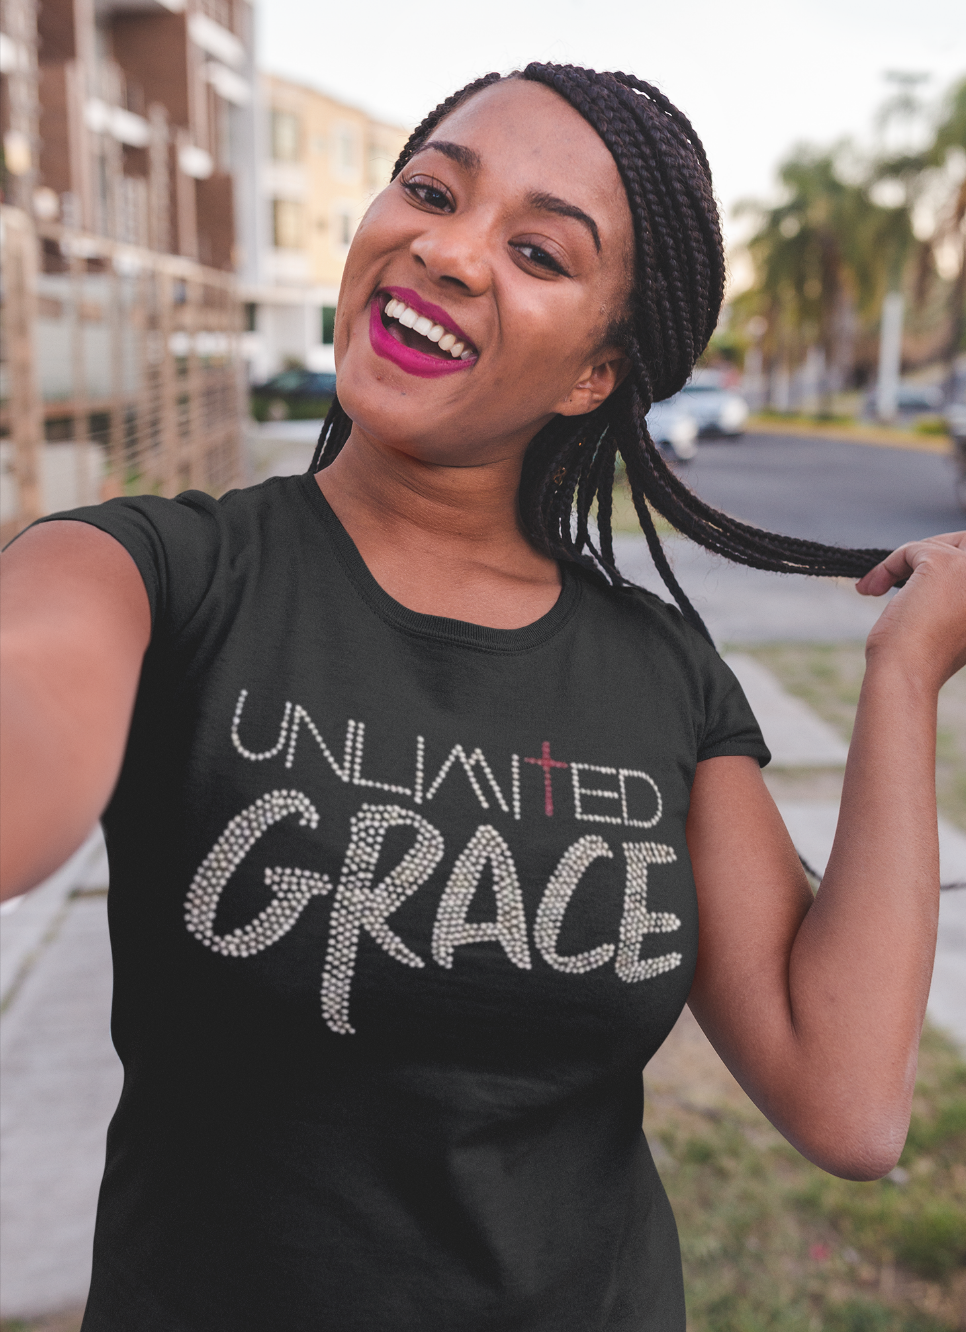 Unlimited Grace Rhinestone Shirt Dropship